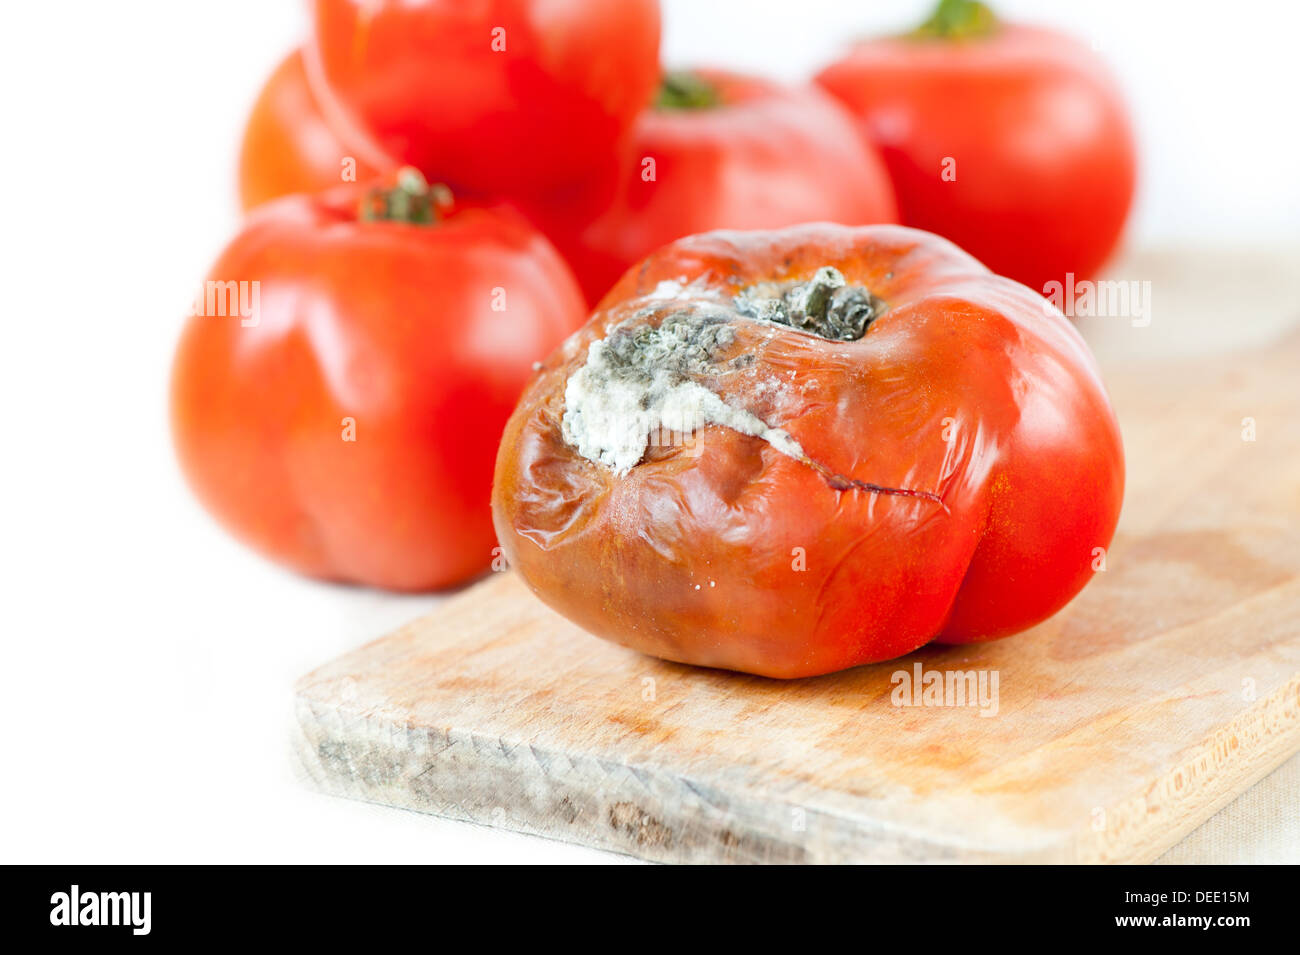 ripe toxic moldy tomato and good fresh fruits Stock Photo